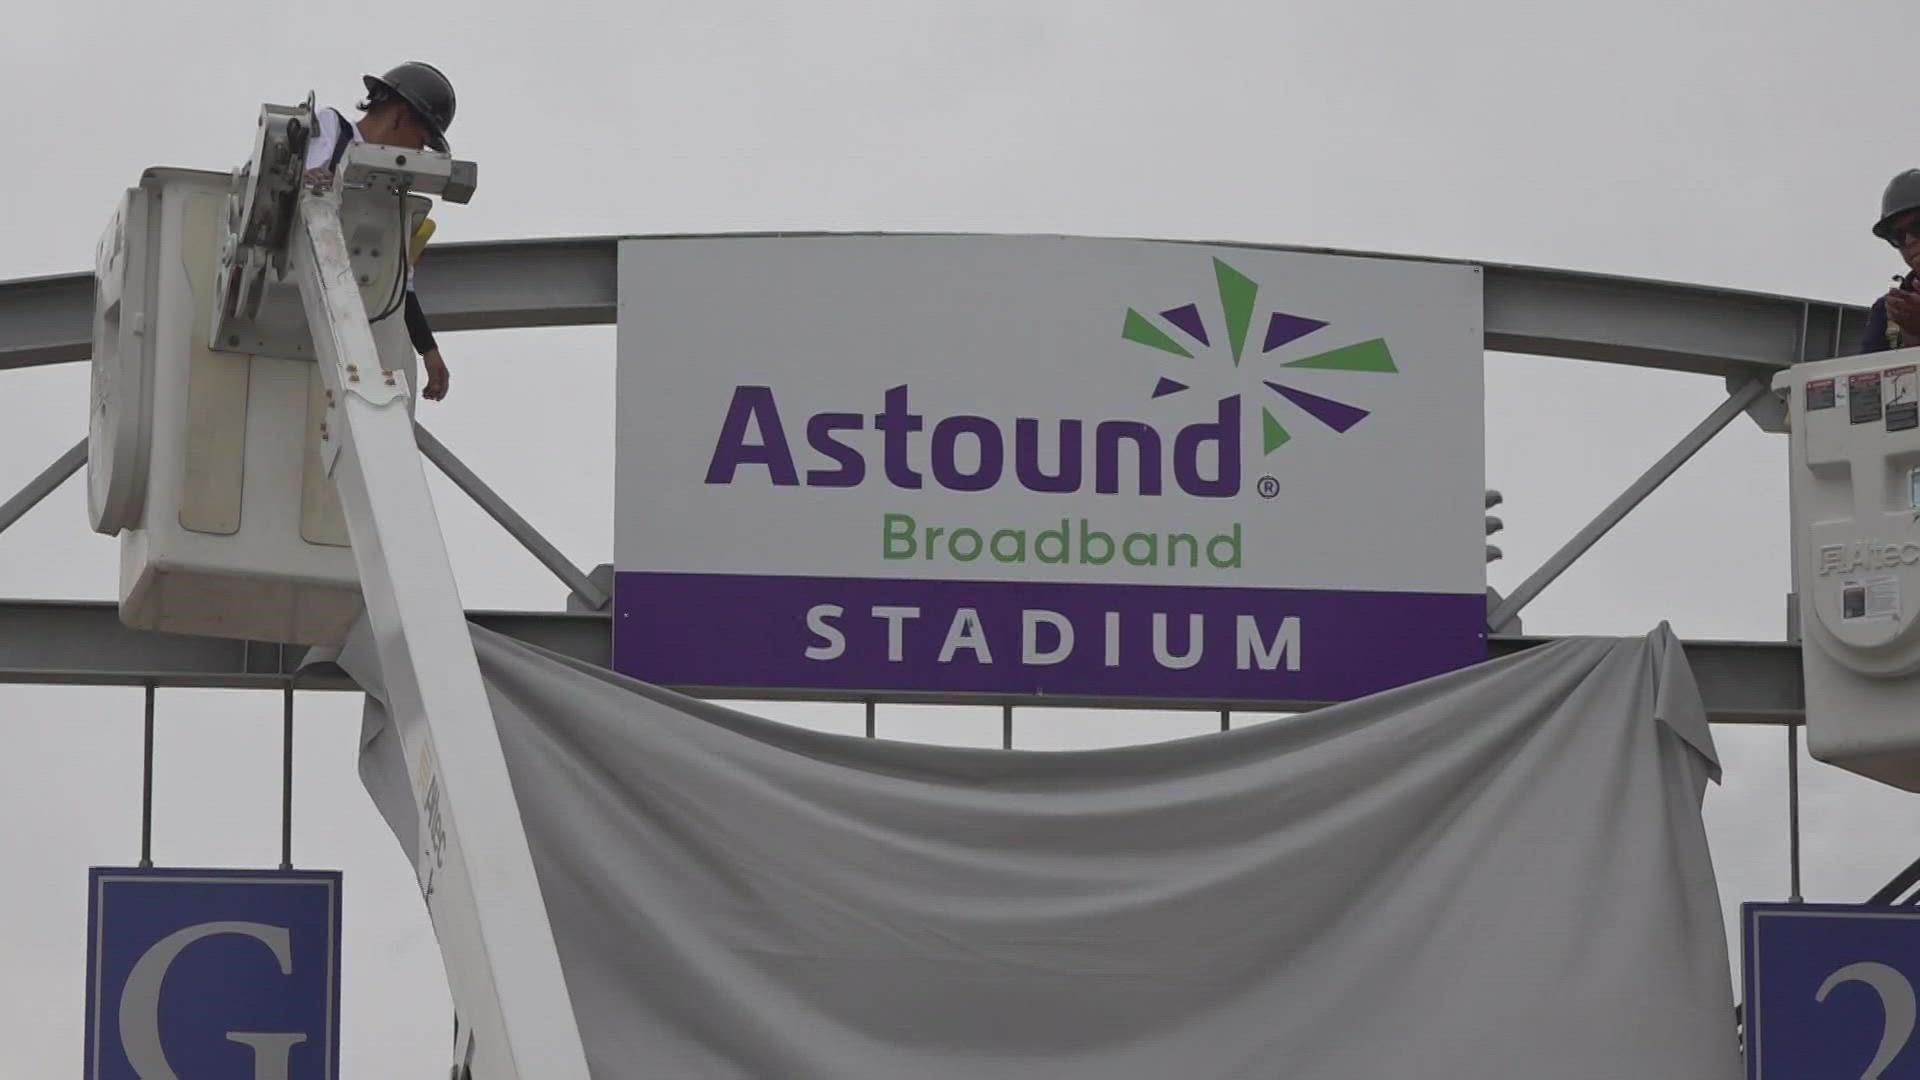 The football stadium will now be called Astound Broadband Stadium.